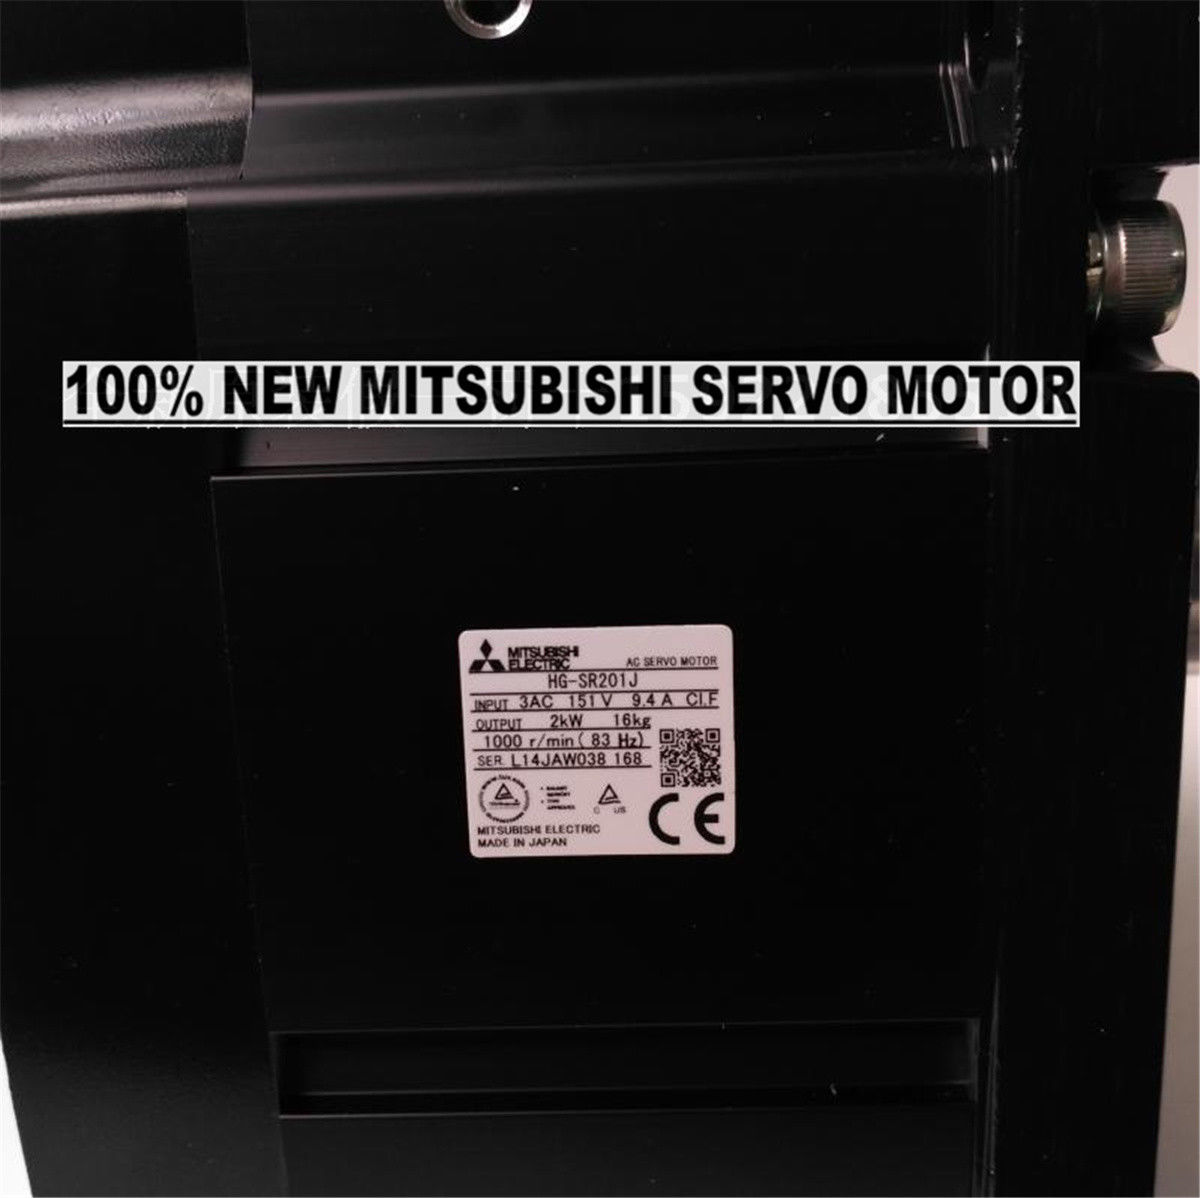 NEW Mitsubishi Servo Motor HG-SR201J in box HGSR201J - zum Schließen ins Bild klicken